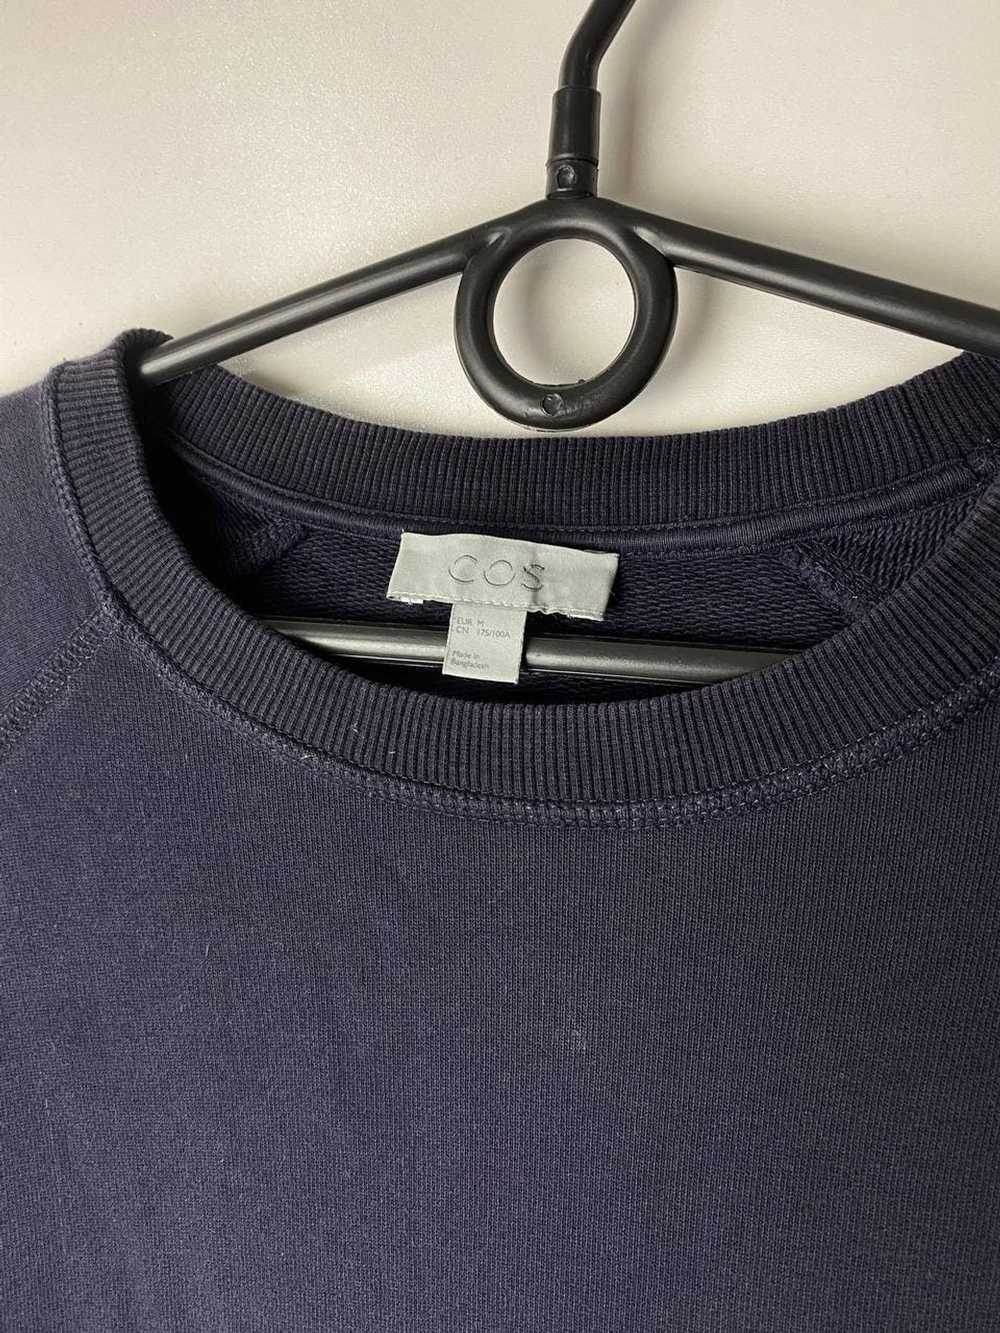 Cos Cos luxury sweatshirt size M - image 3